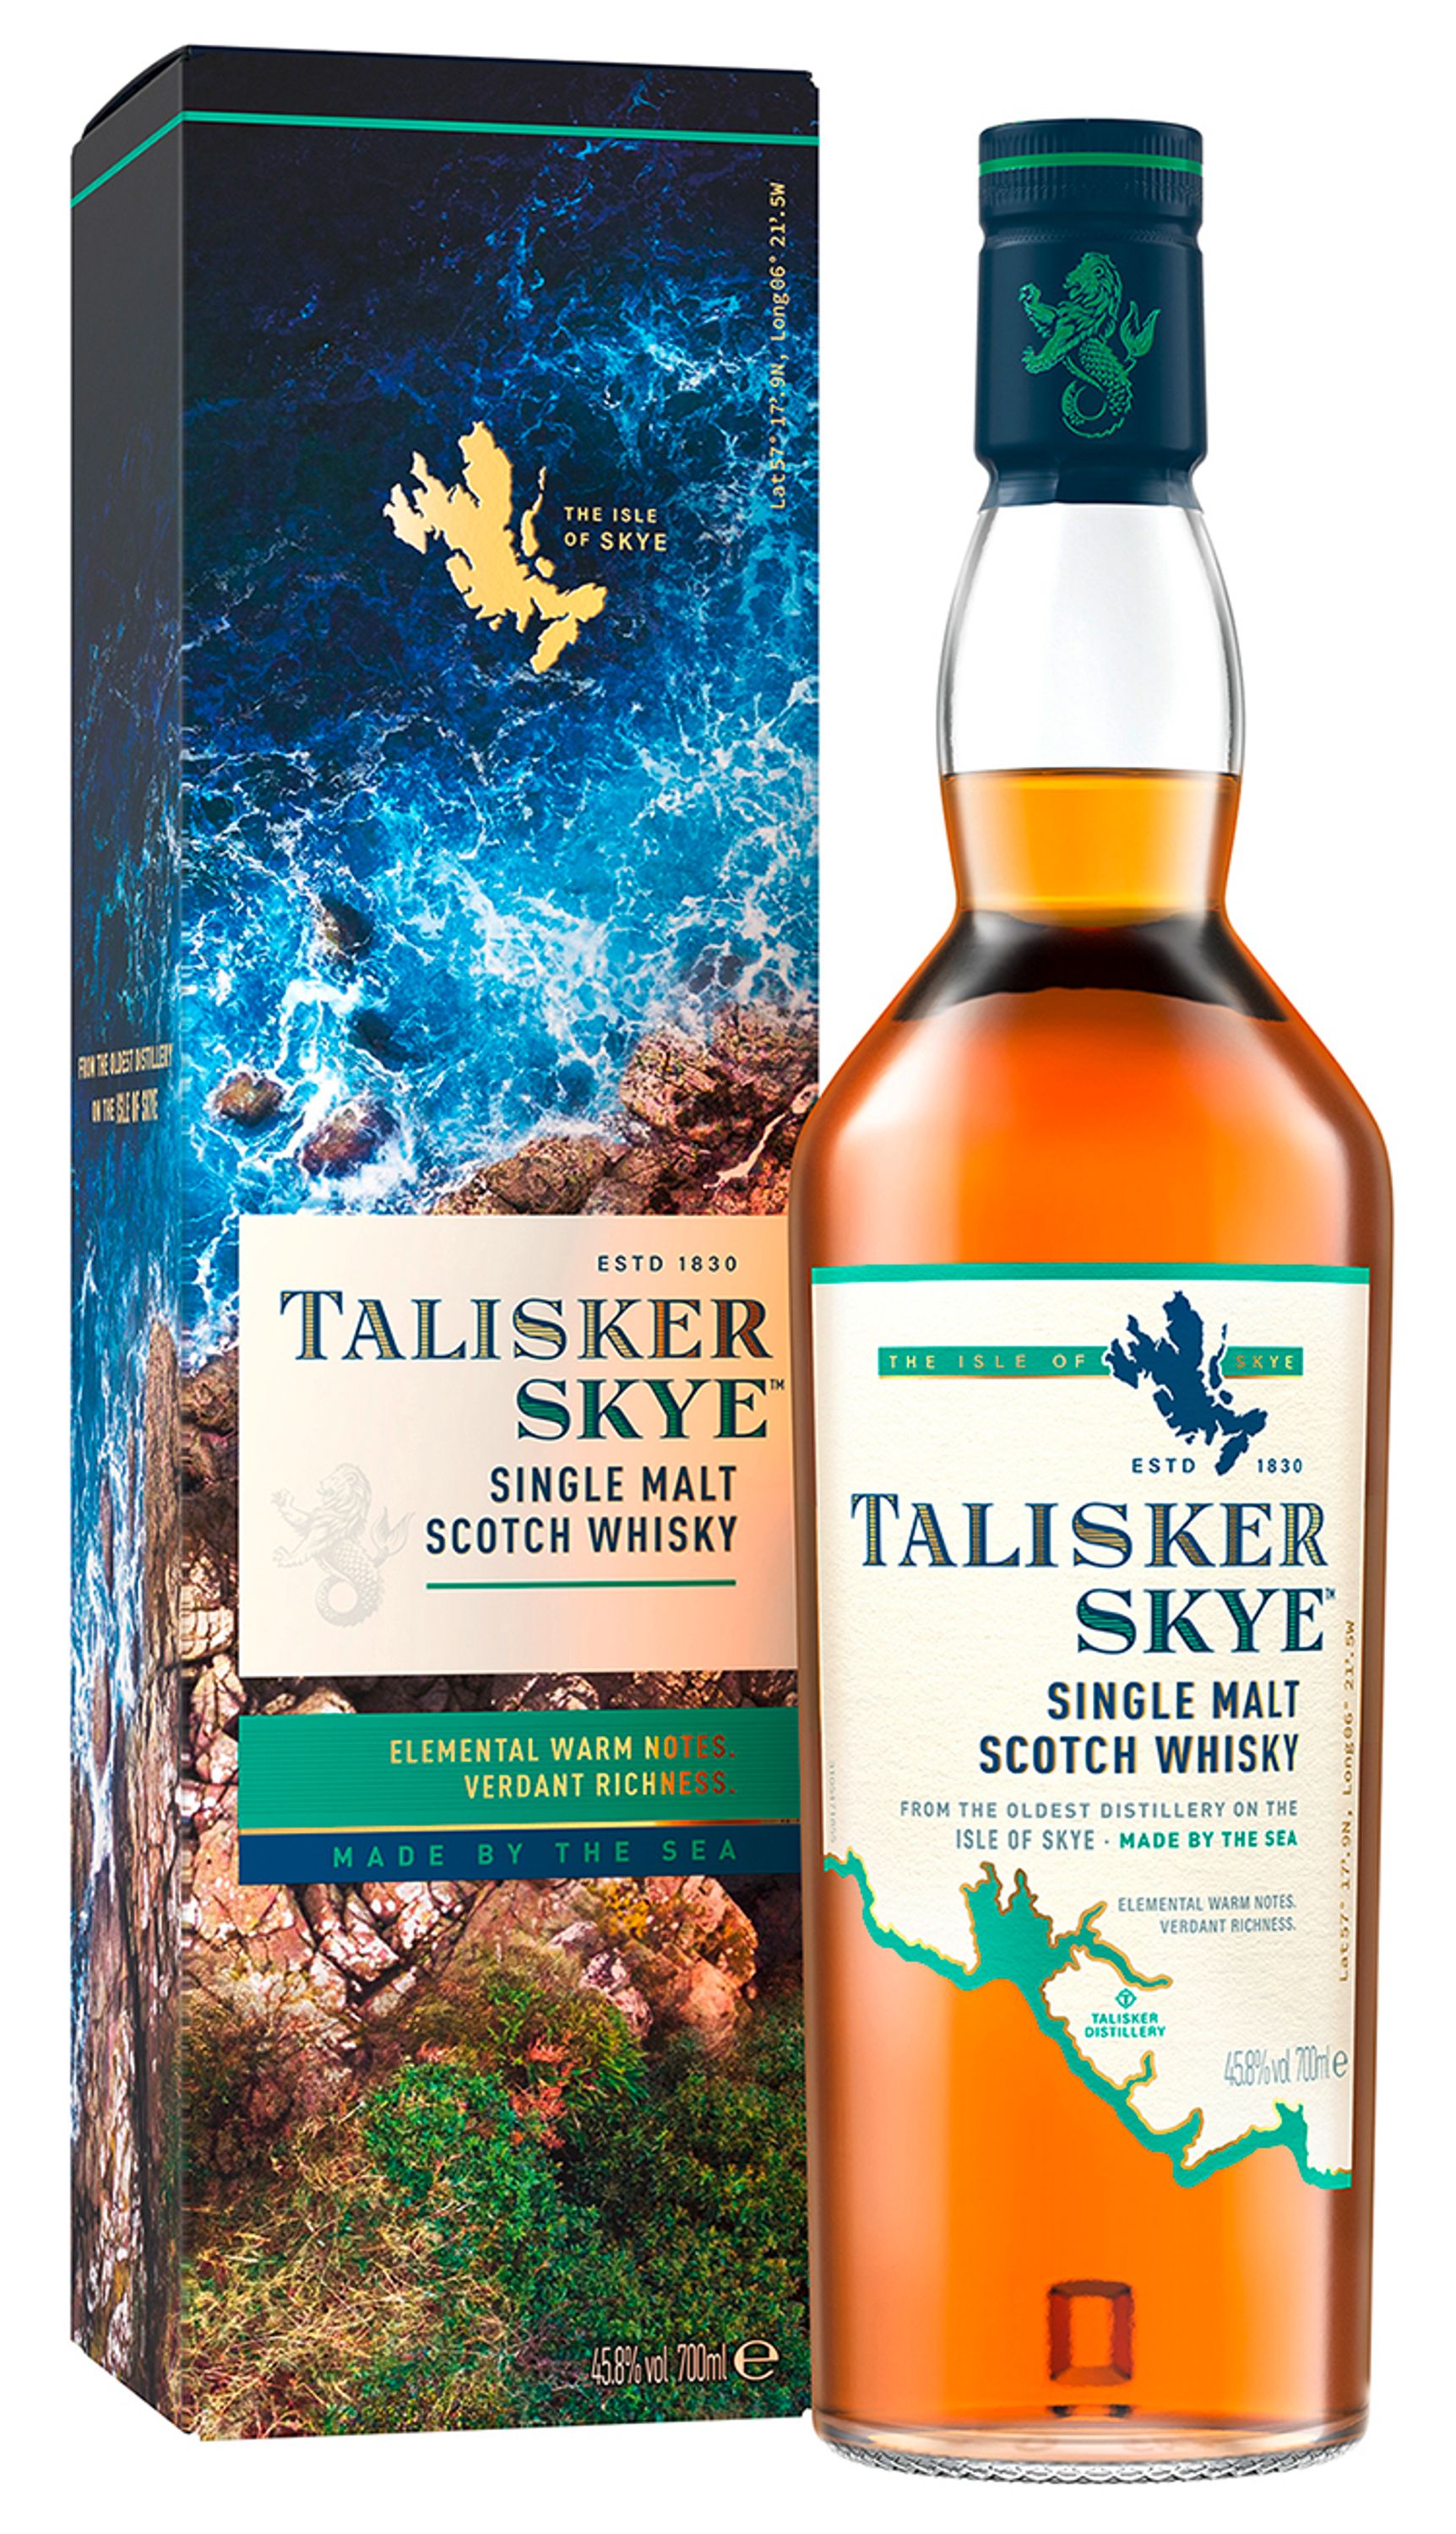 Talisker Skye Single Malt Scotch Whisky 0,7l, alk. 45,8 tilavuusprosenttia.